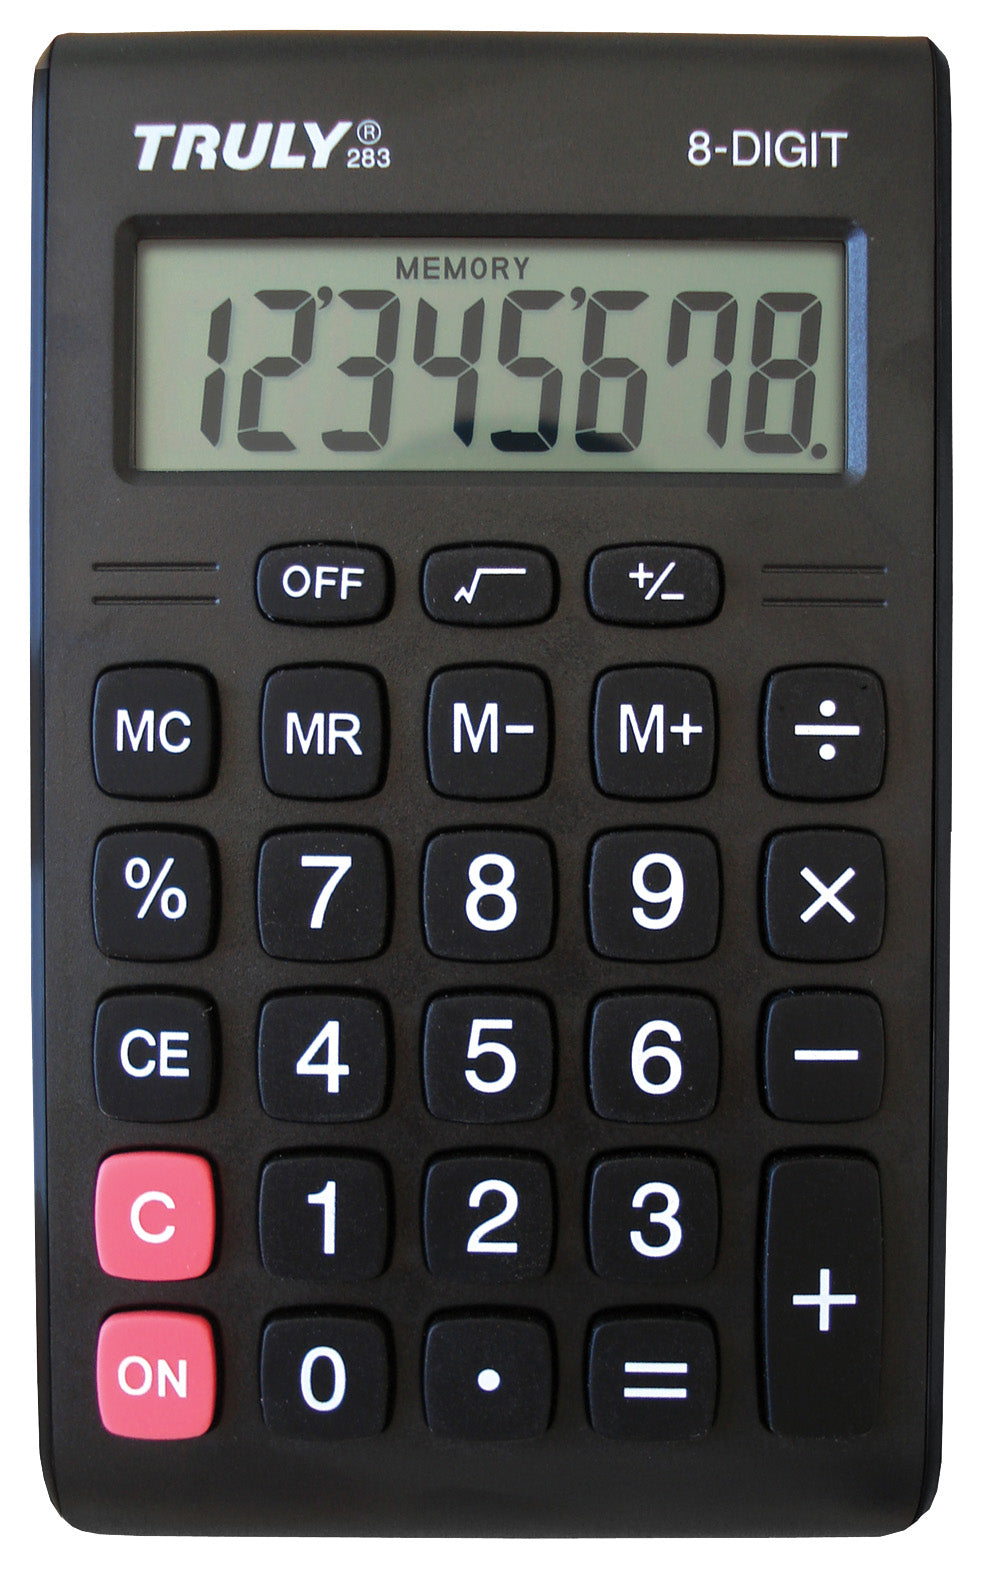 Truly 283 - 8 Digit Pocket Calculator Battery